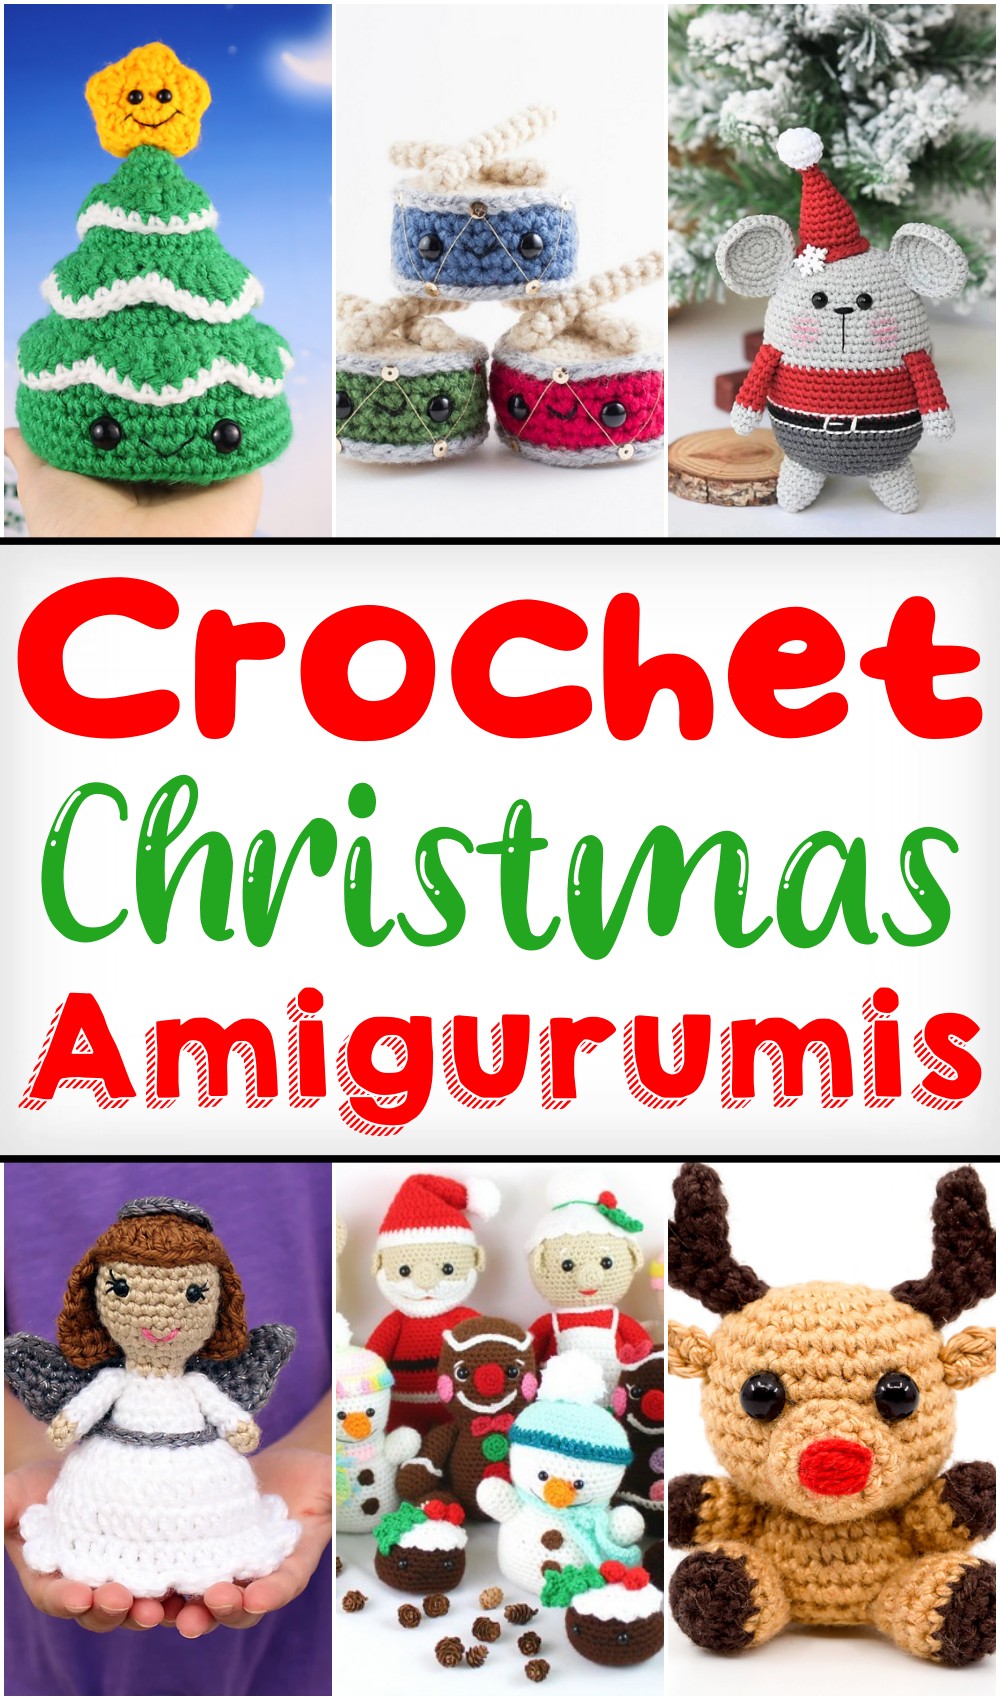 15 Crochet Christmas Amigurumi Patterns For Holiday Decor